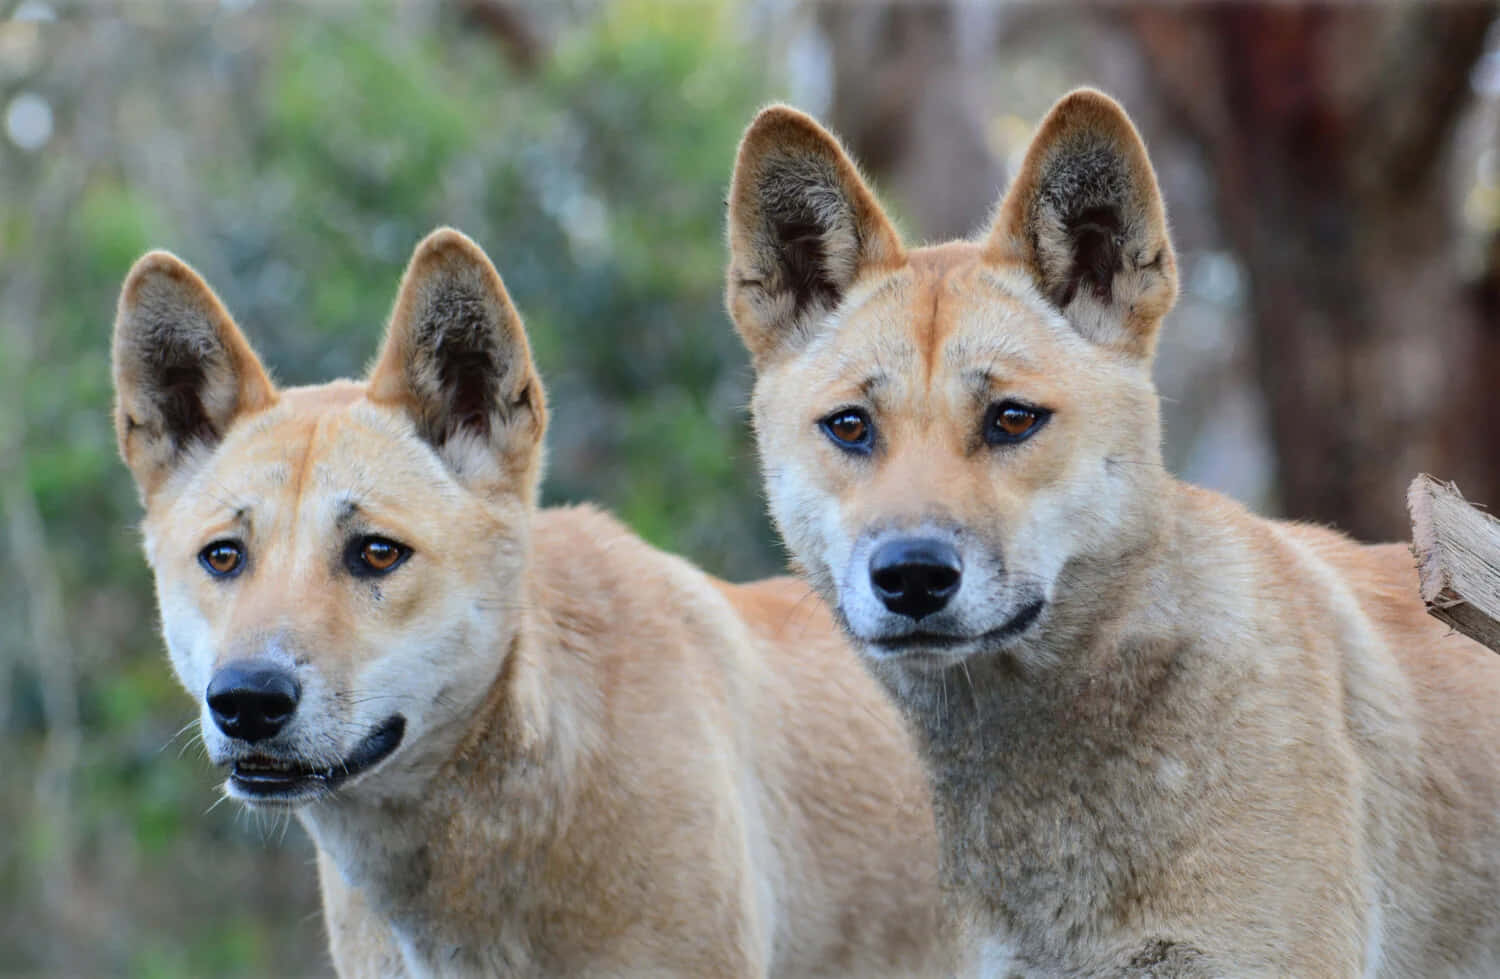 Imagende Un Dingo Australiano.